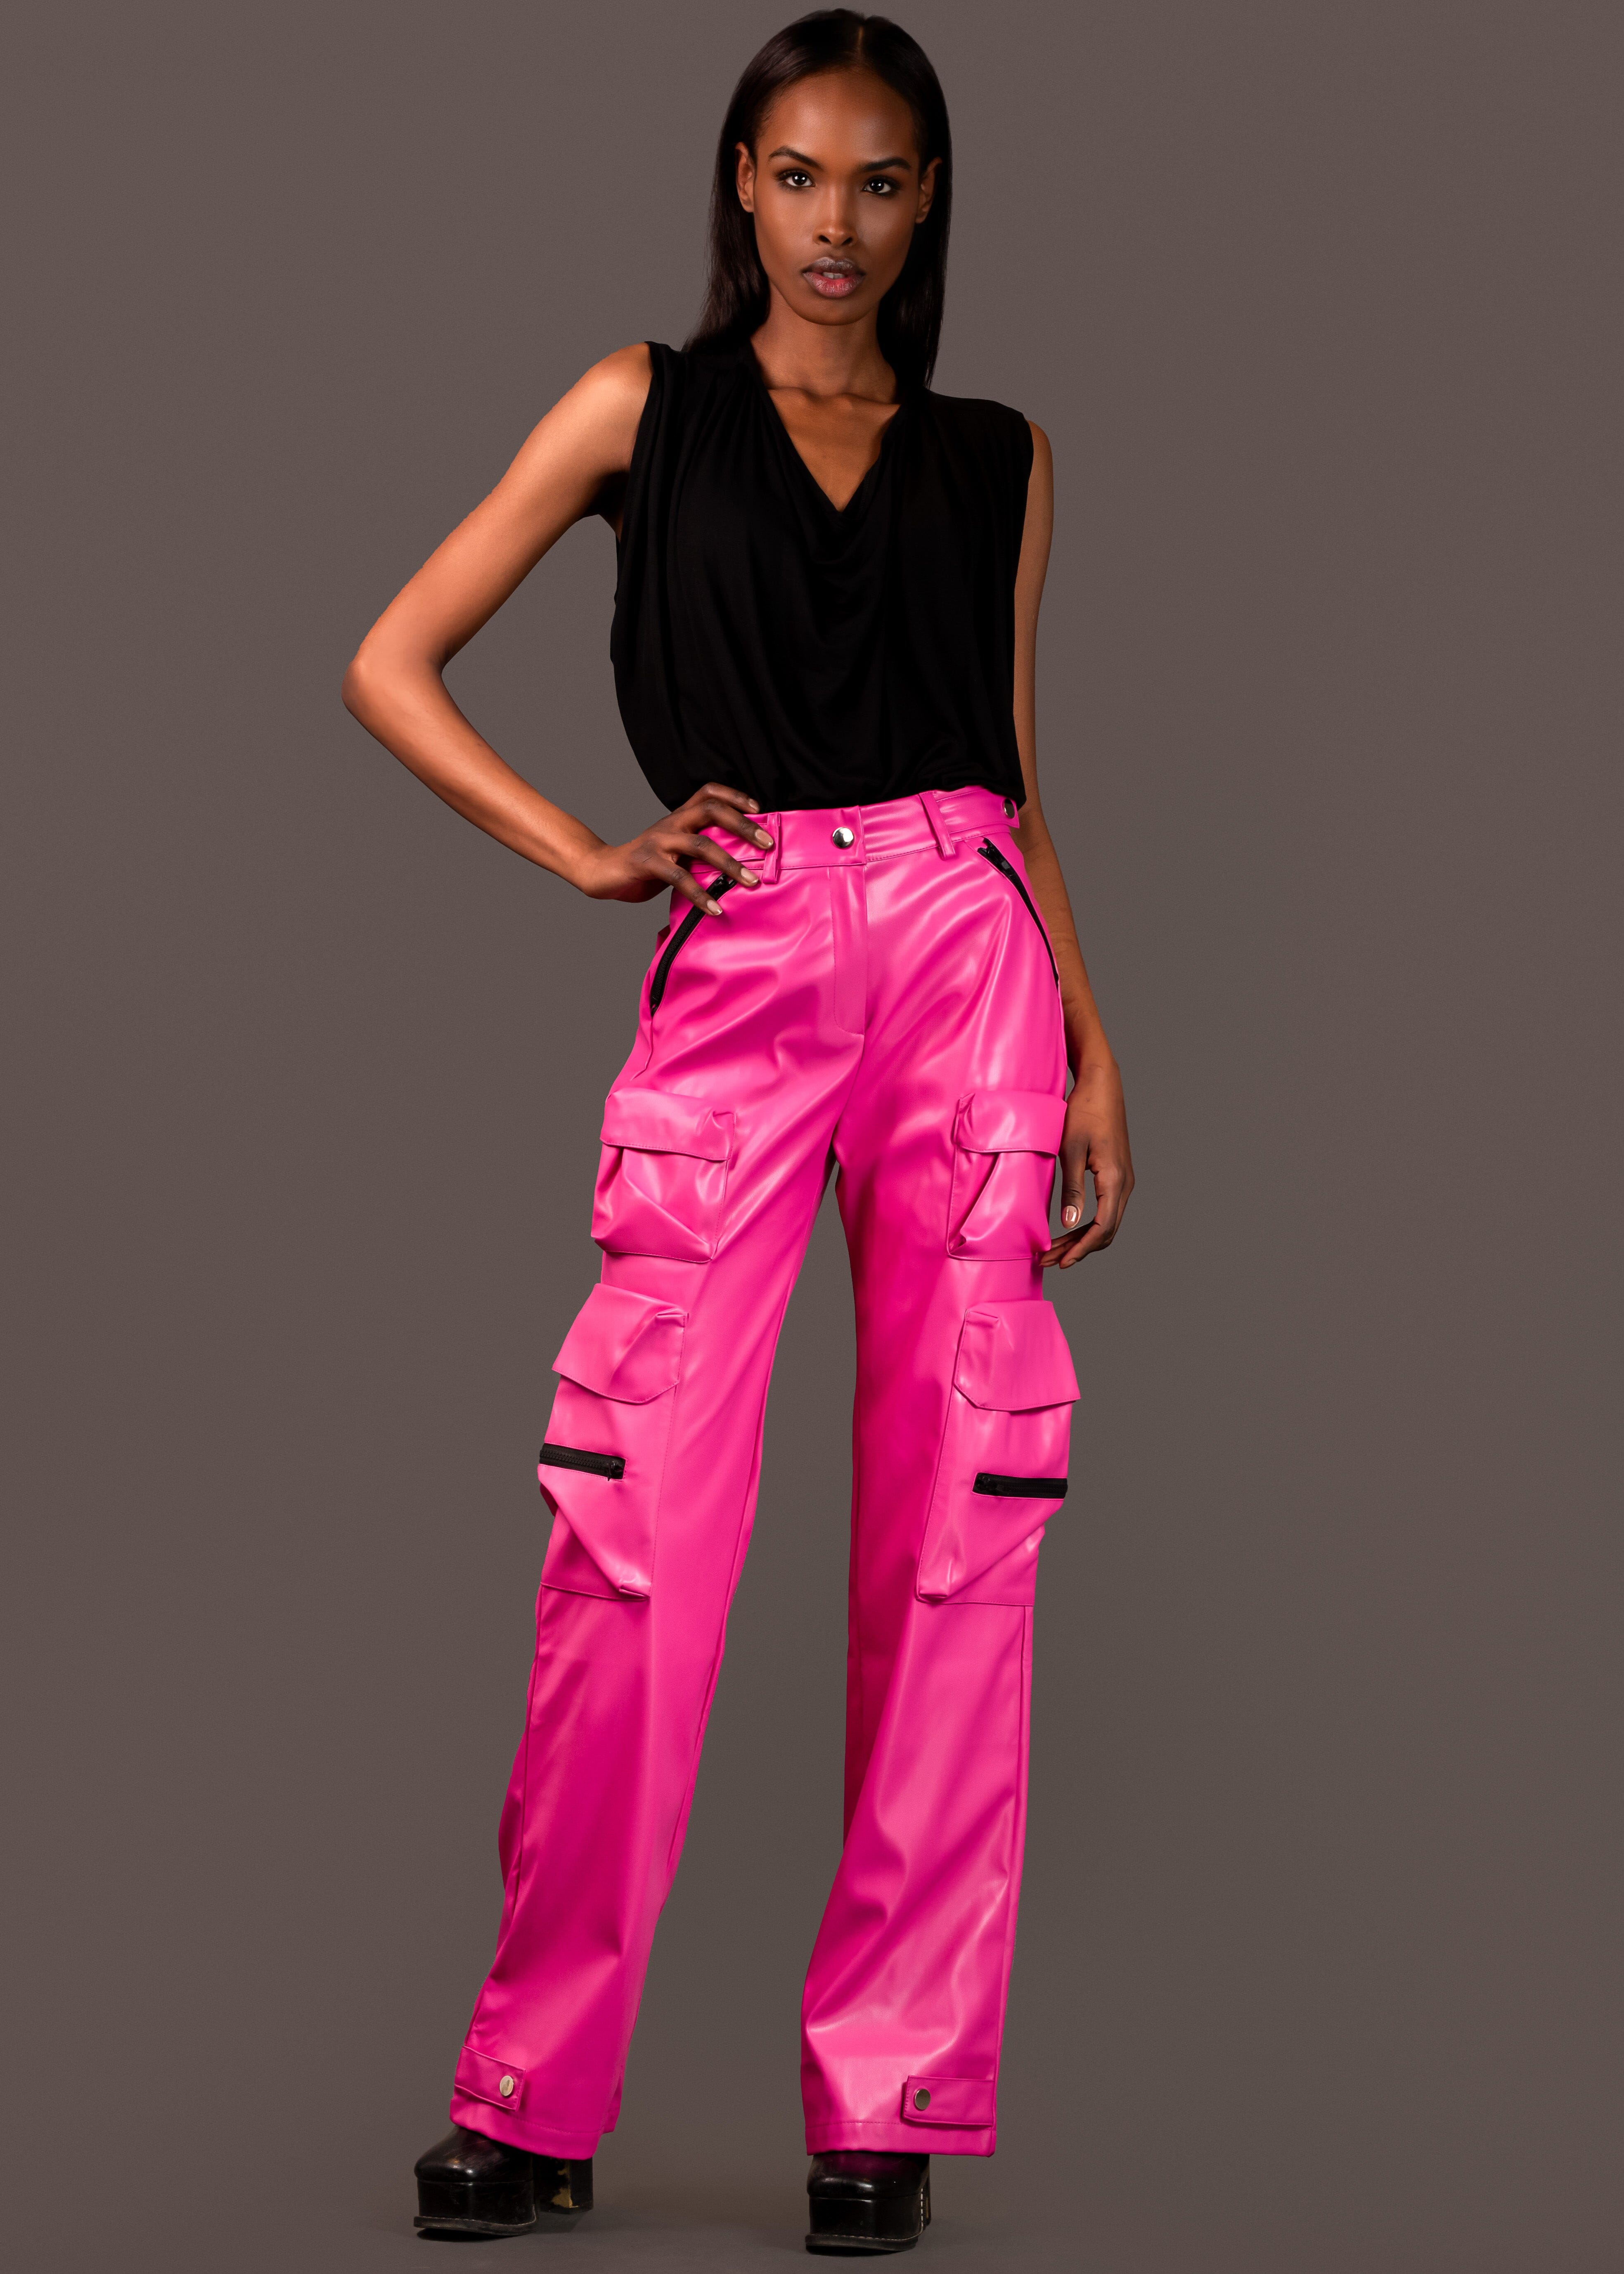 Hot Pink Vegan Leather Cargo Pant Pants Kate Hewko 